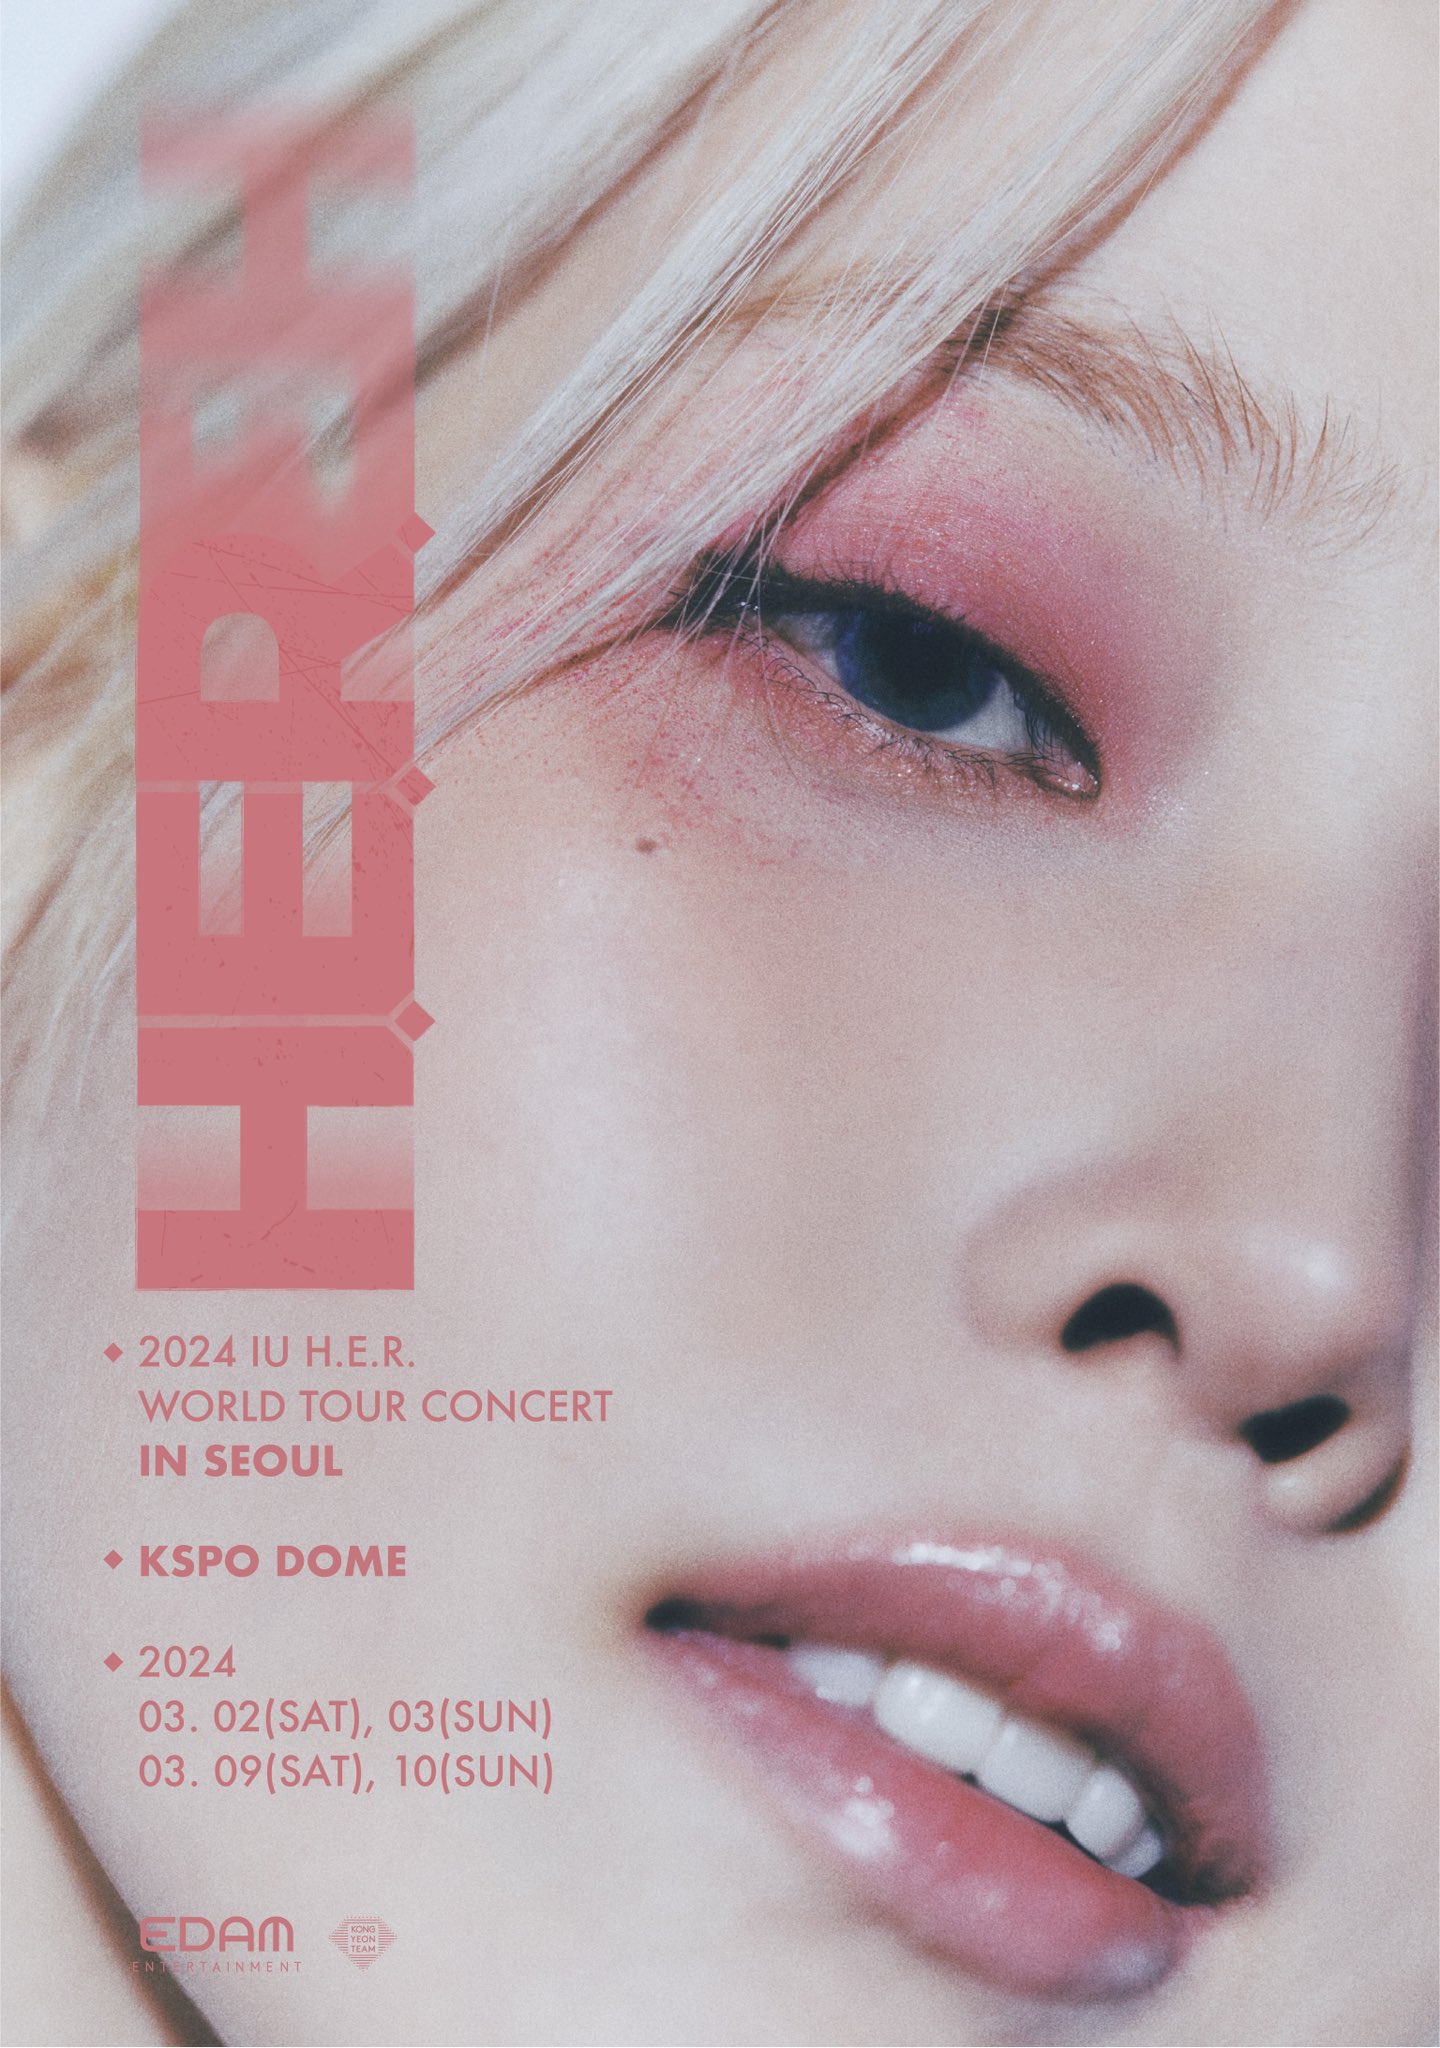 2024 IU H.E.R. WORLD TOUR CONCERT IN SEOUL